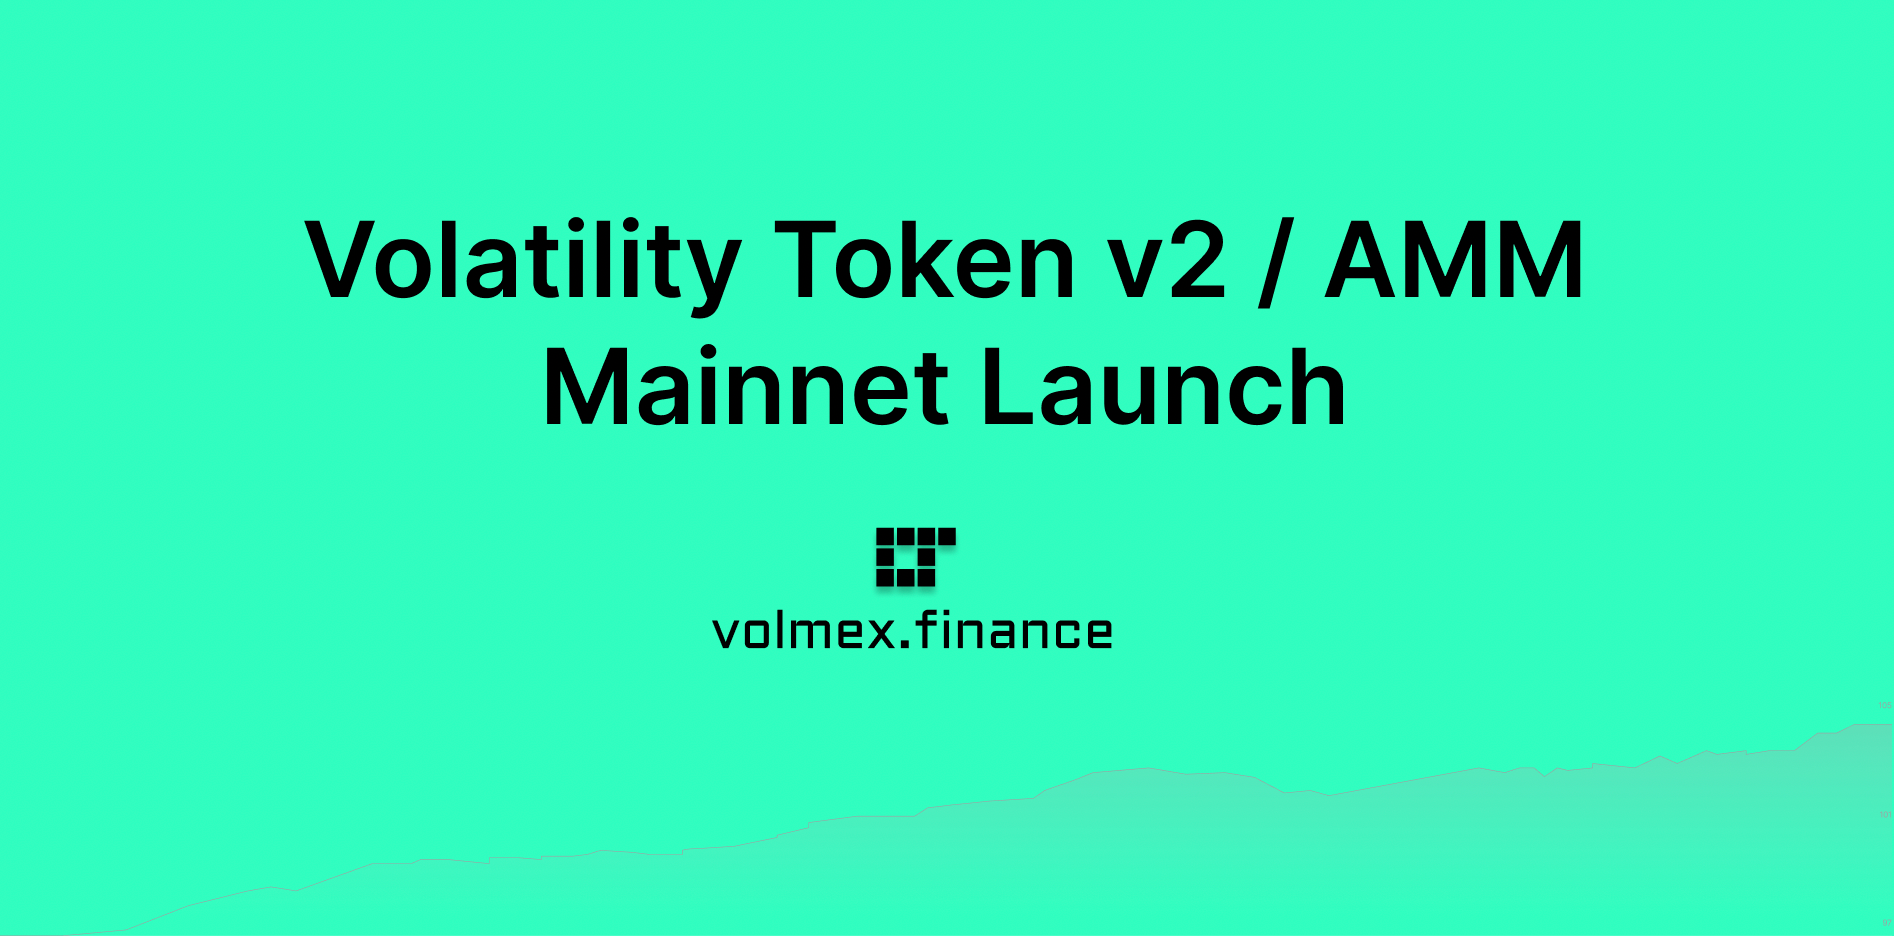 Volmex Volatility Token v2 / AMM is live!